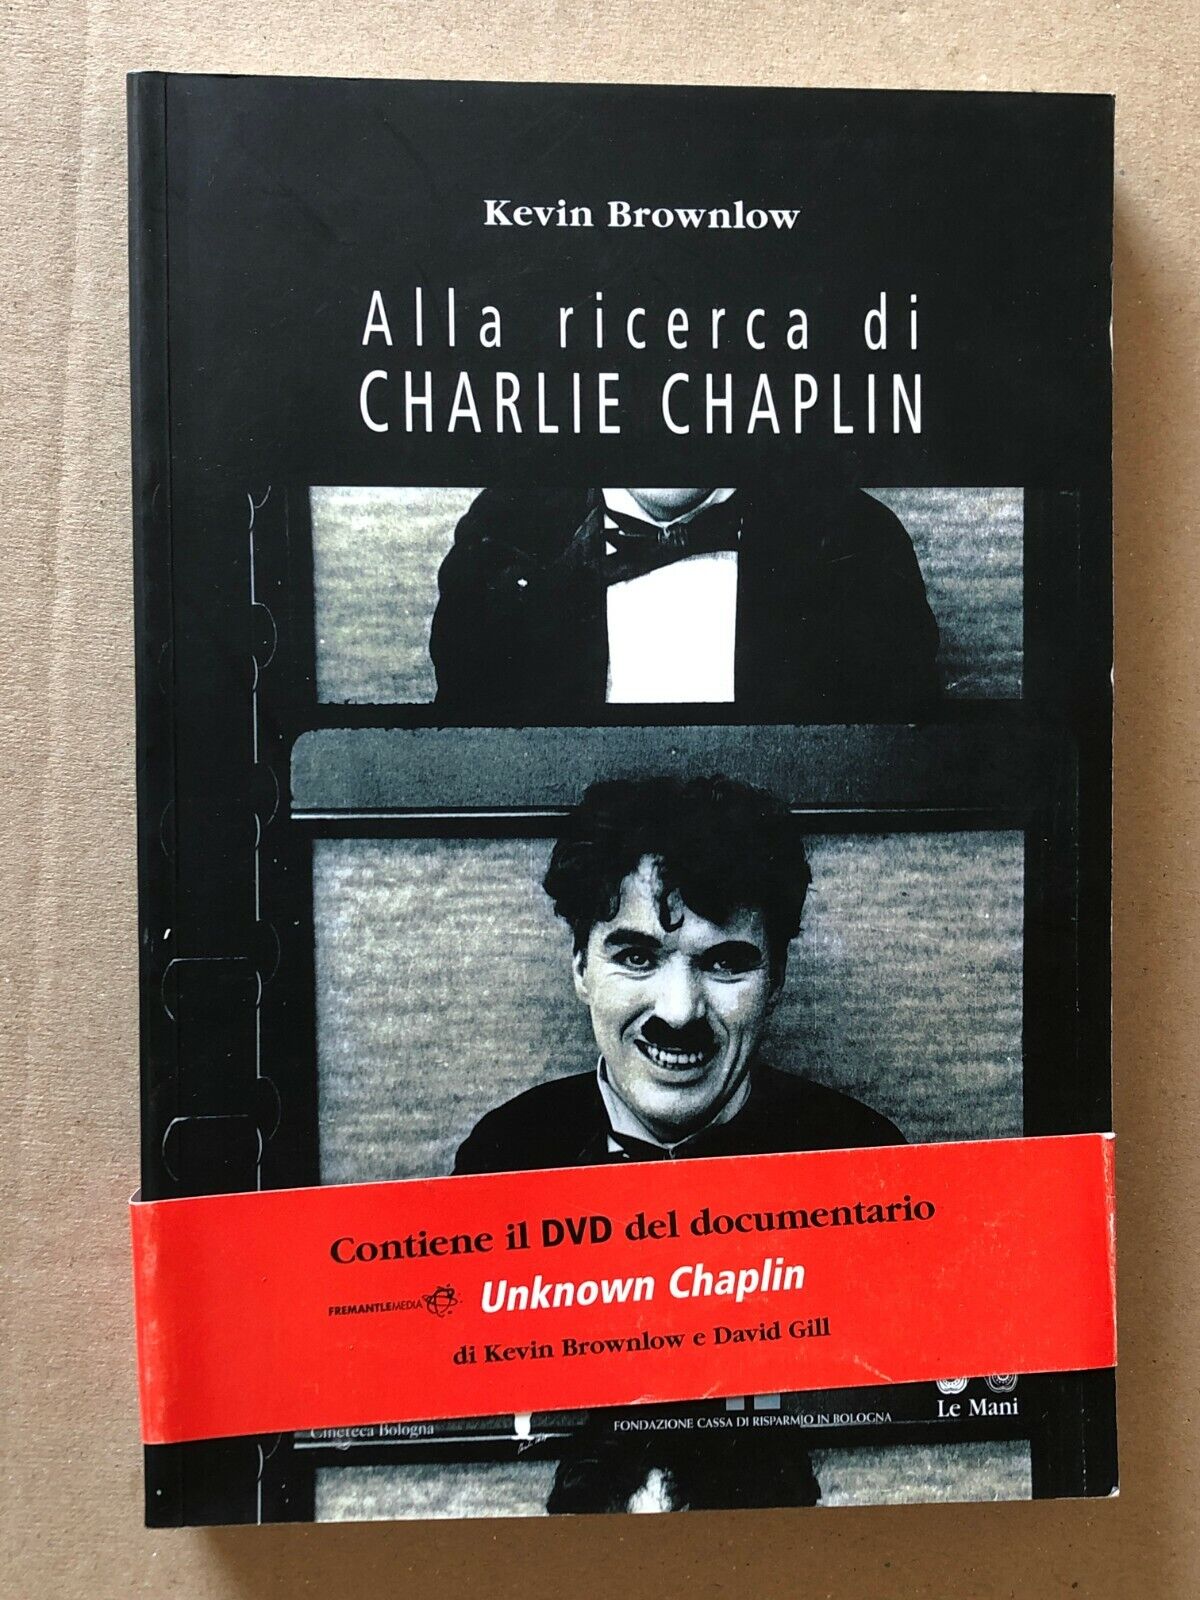 Brownlow – ALLA RICERCA DI CHARLIE CHAPLIN – Le Mani 2005 + dvd Unknown Chaplin